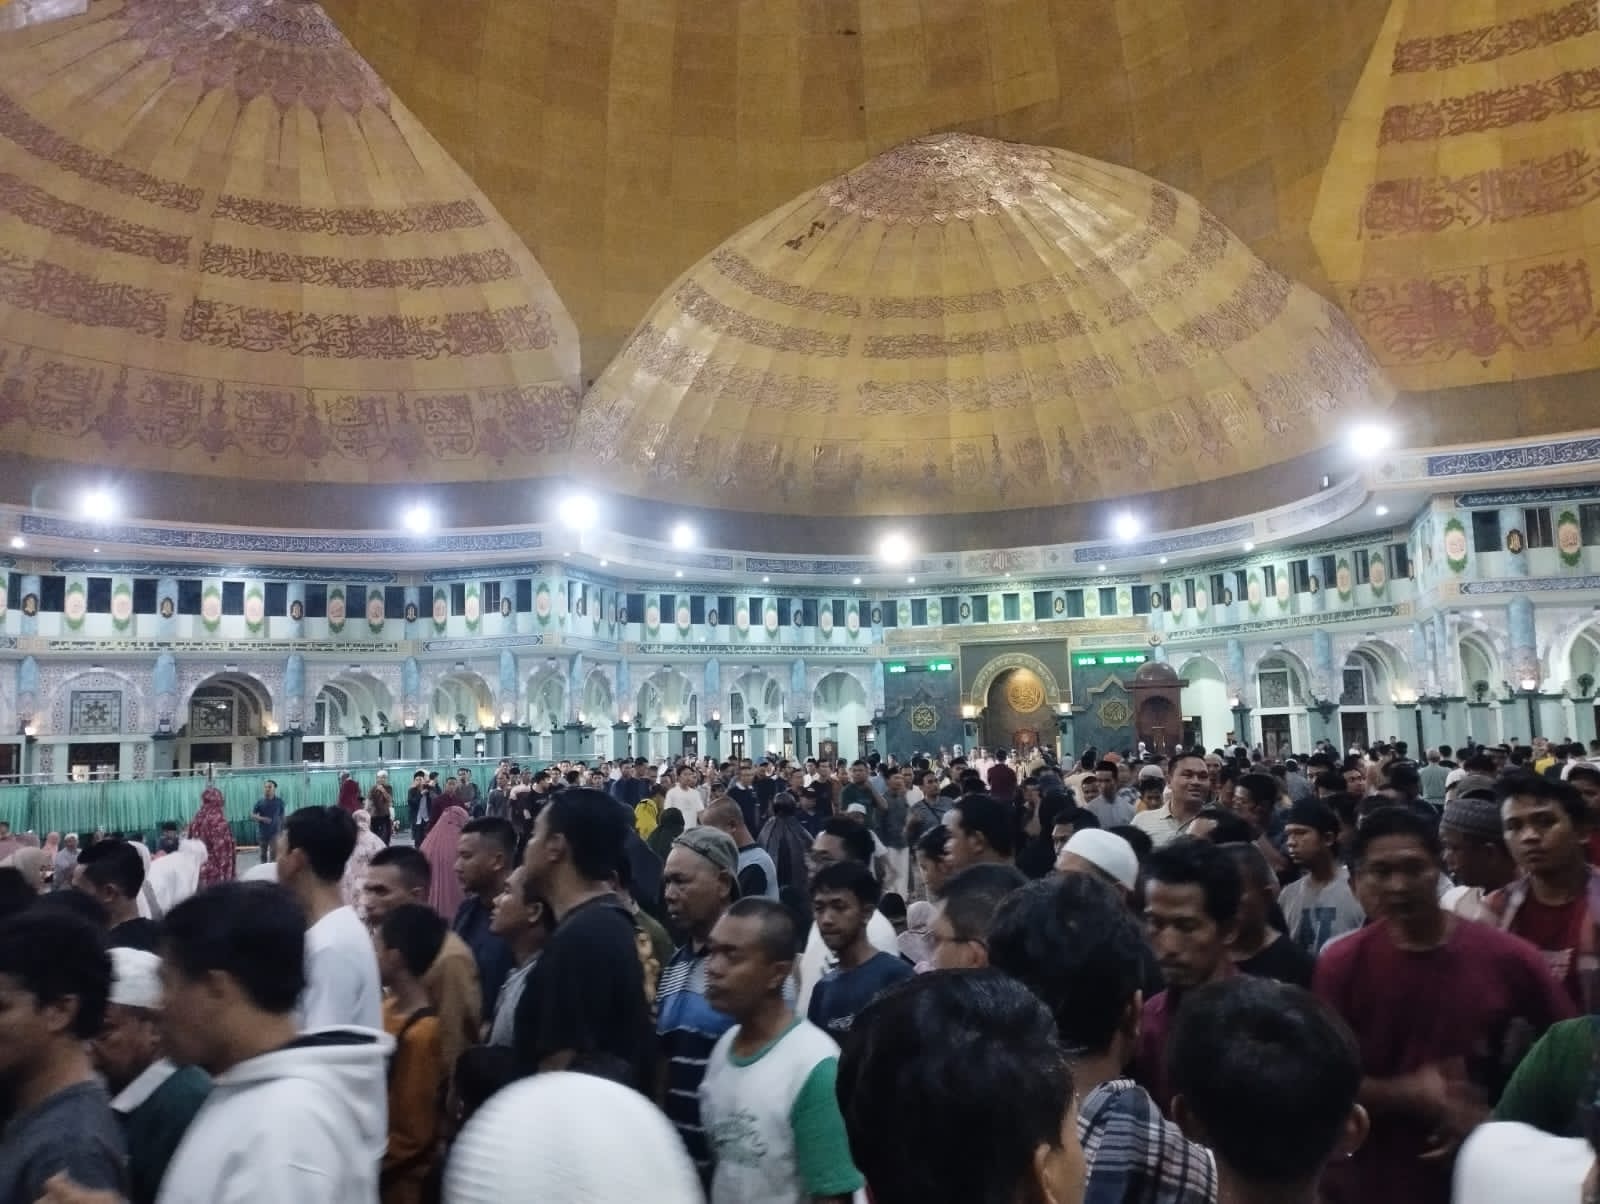 IMG-antusias-liburan-tahun-baru-ke-masjid-raya-al-a-zhom-pengunjung-kagum-dengan-hasil-pembangunannya